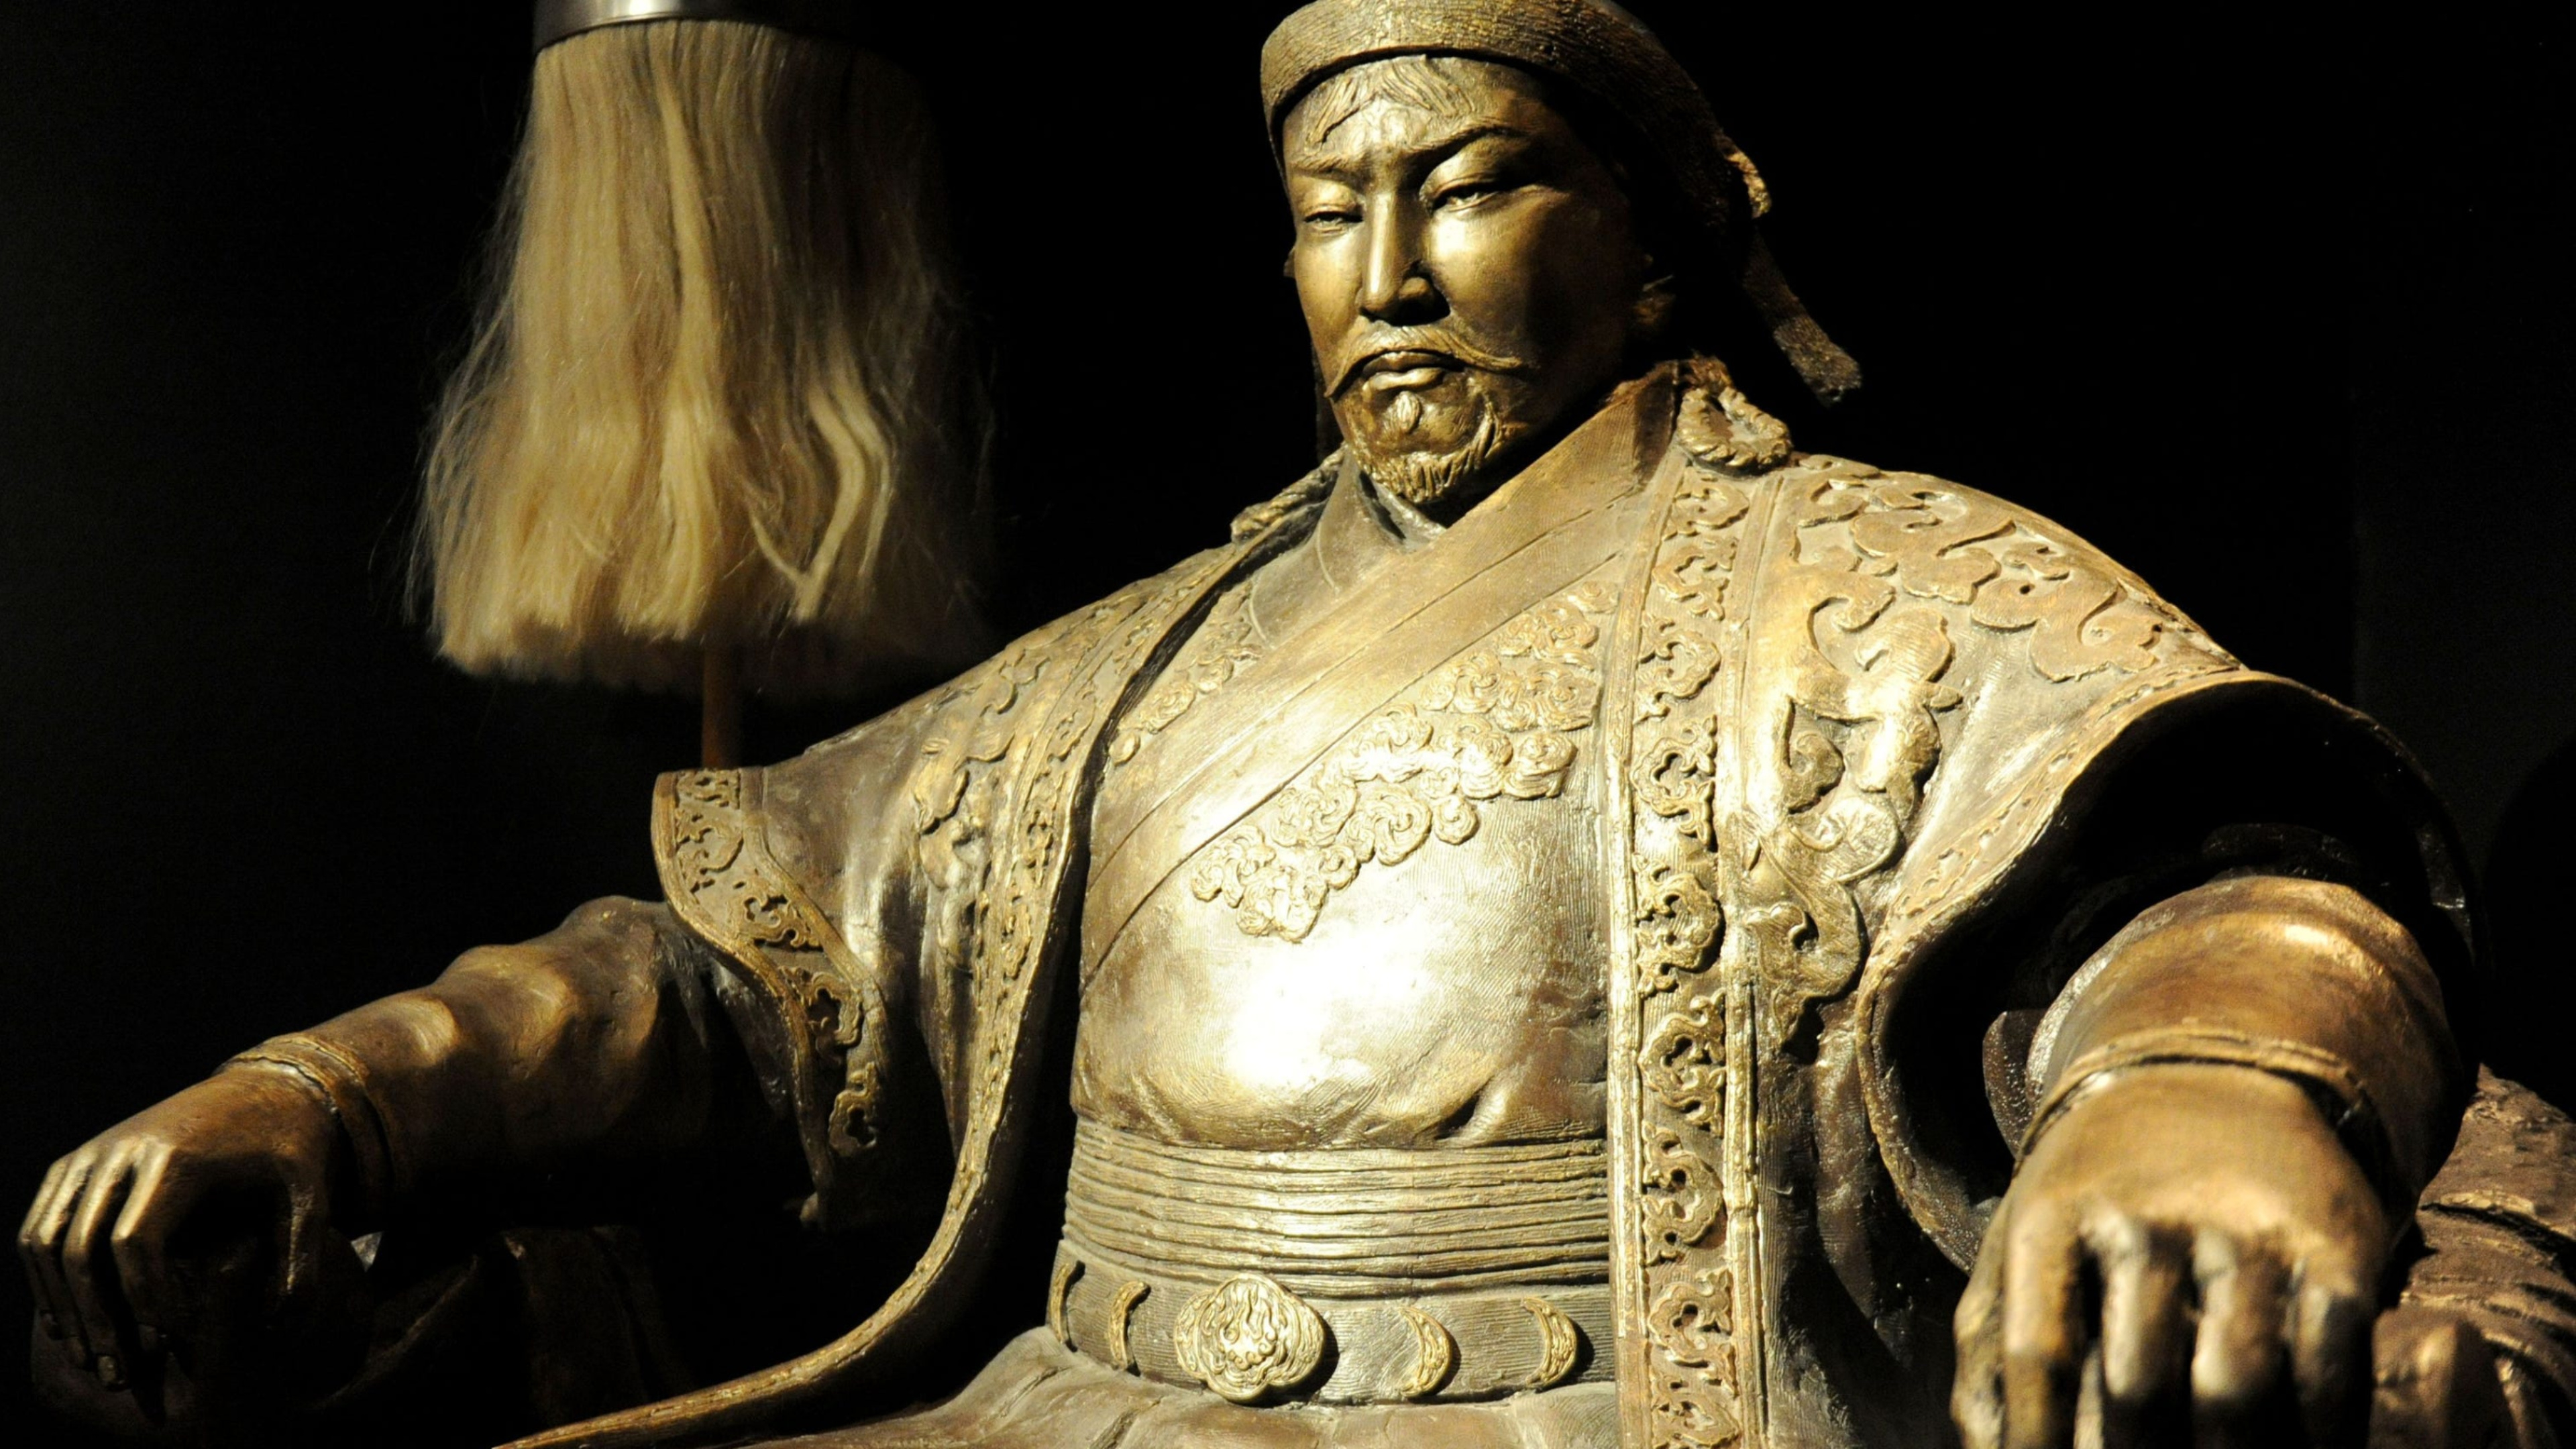 HD wallpaper, Genghis Khan Mongolia, Mongols Statue, 3840X2160 4K Desktop, Desktop 4K Mongolia Wallpaper Image, Asian History, Monumental Tribute